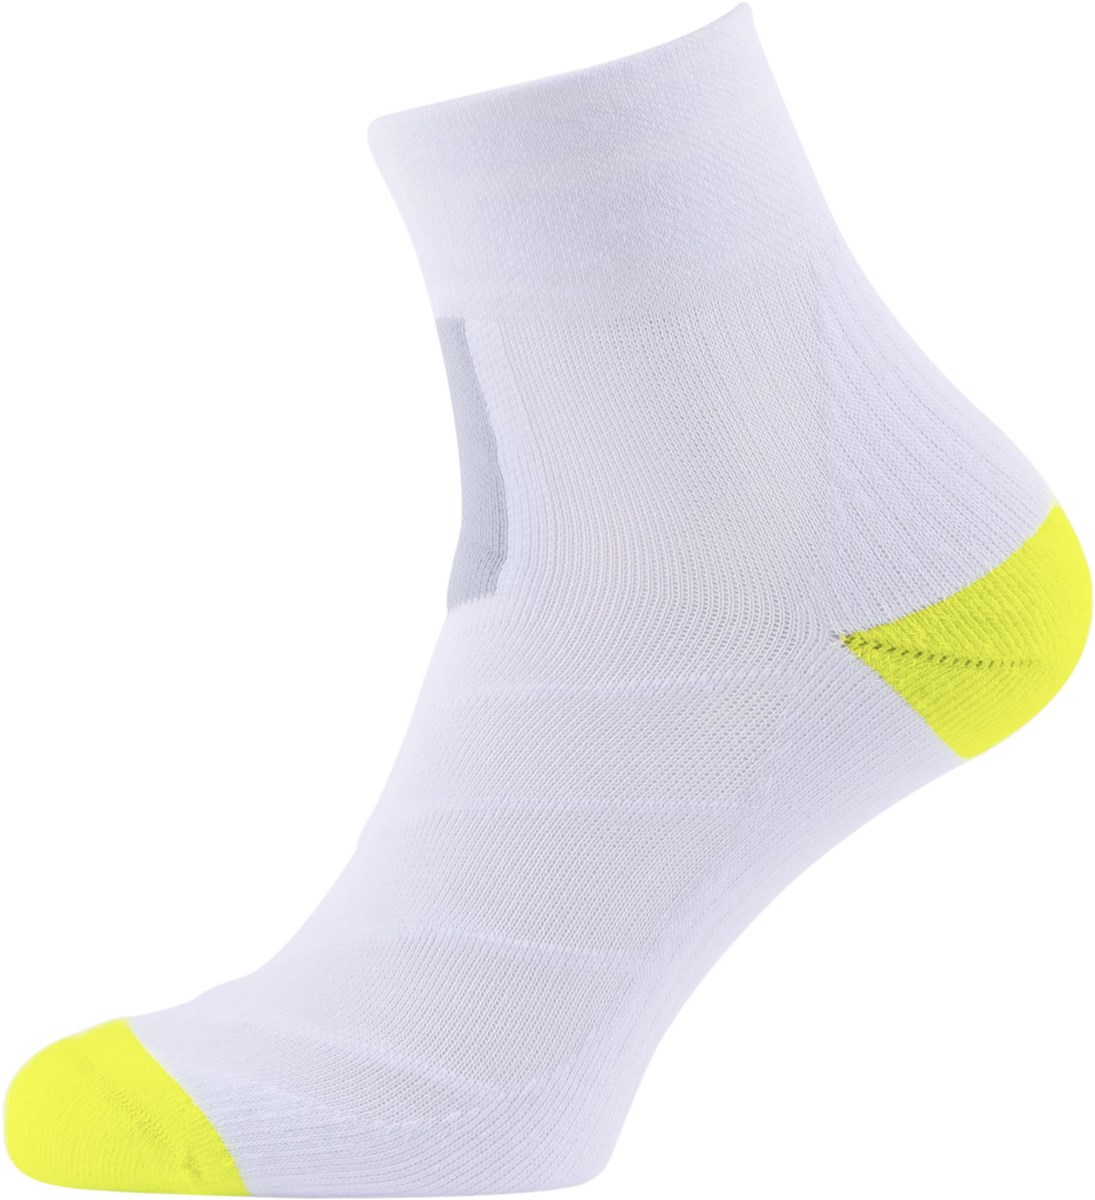 Sealskinz Run Race Ankle Socks product image